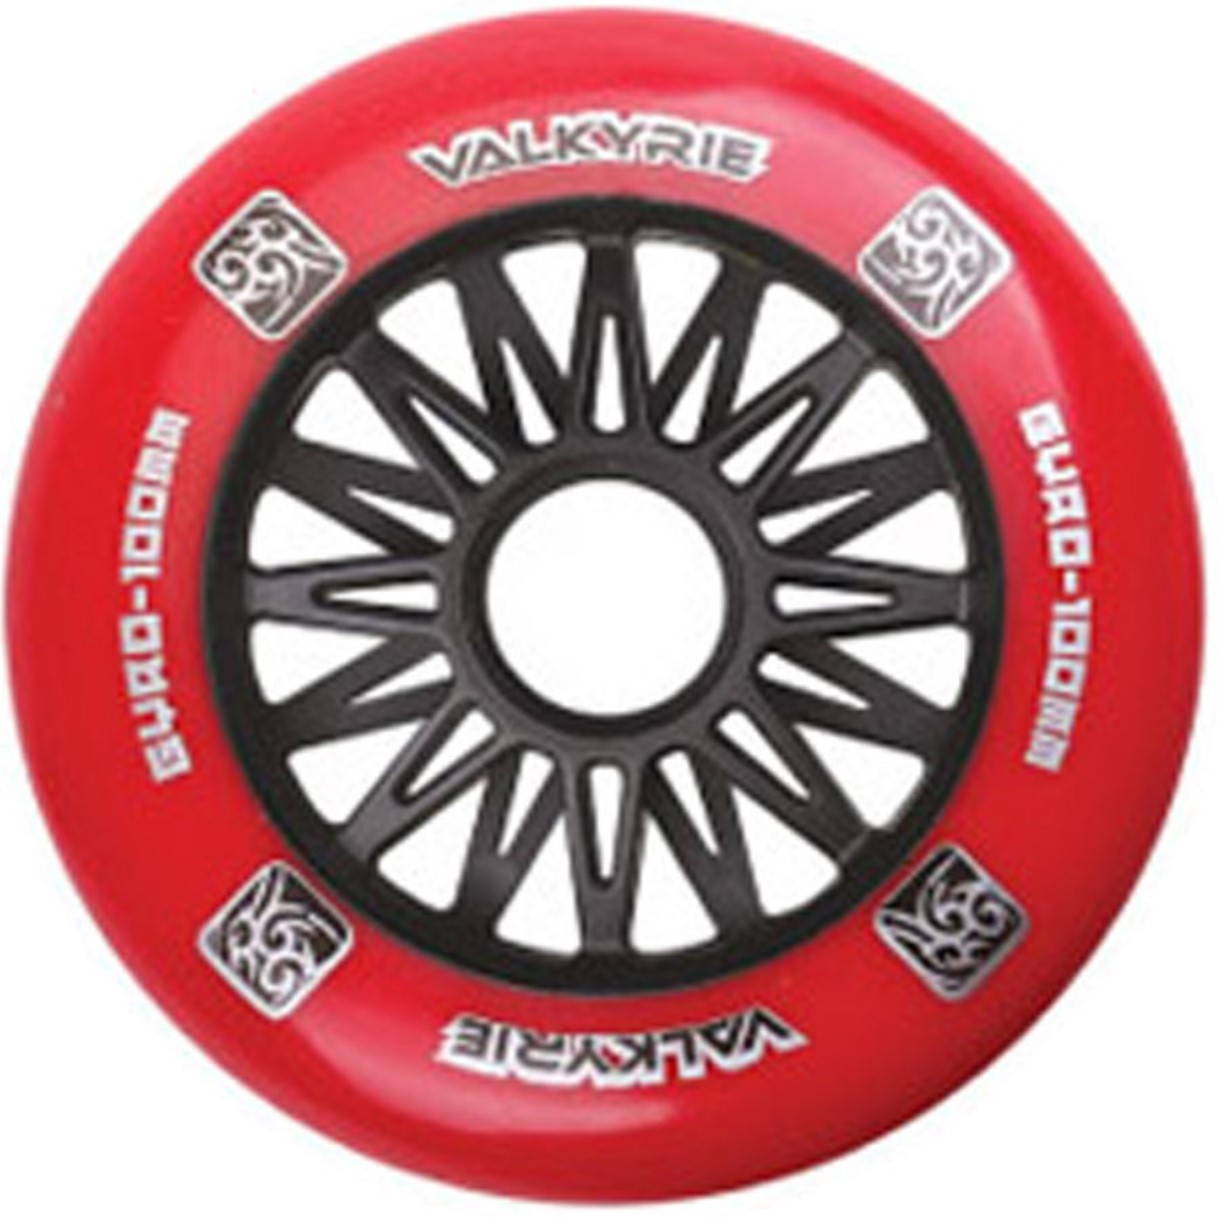 Gyro Valkyrie red inline skate wheel